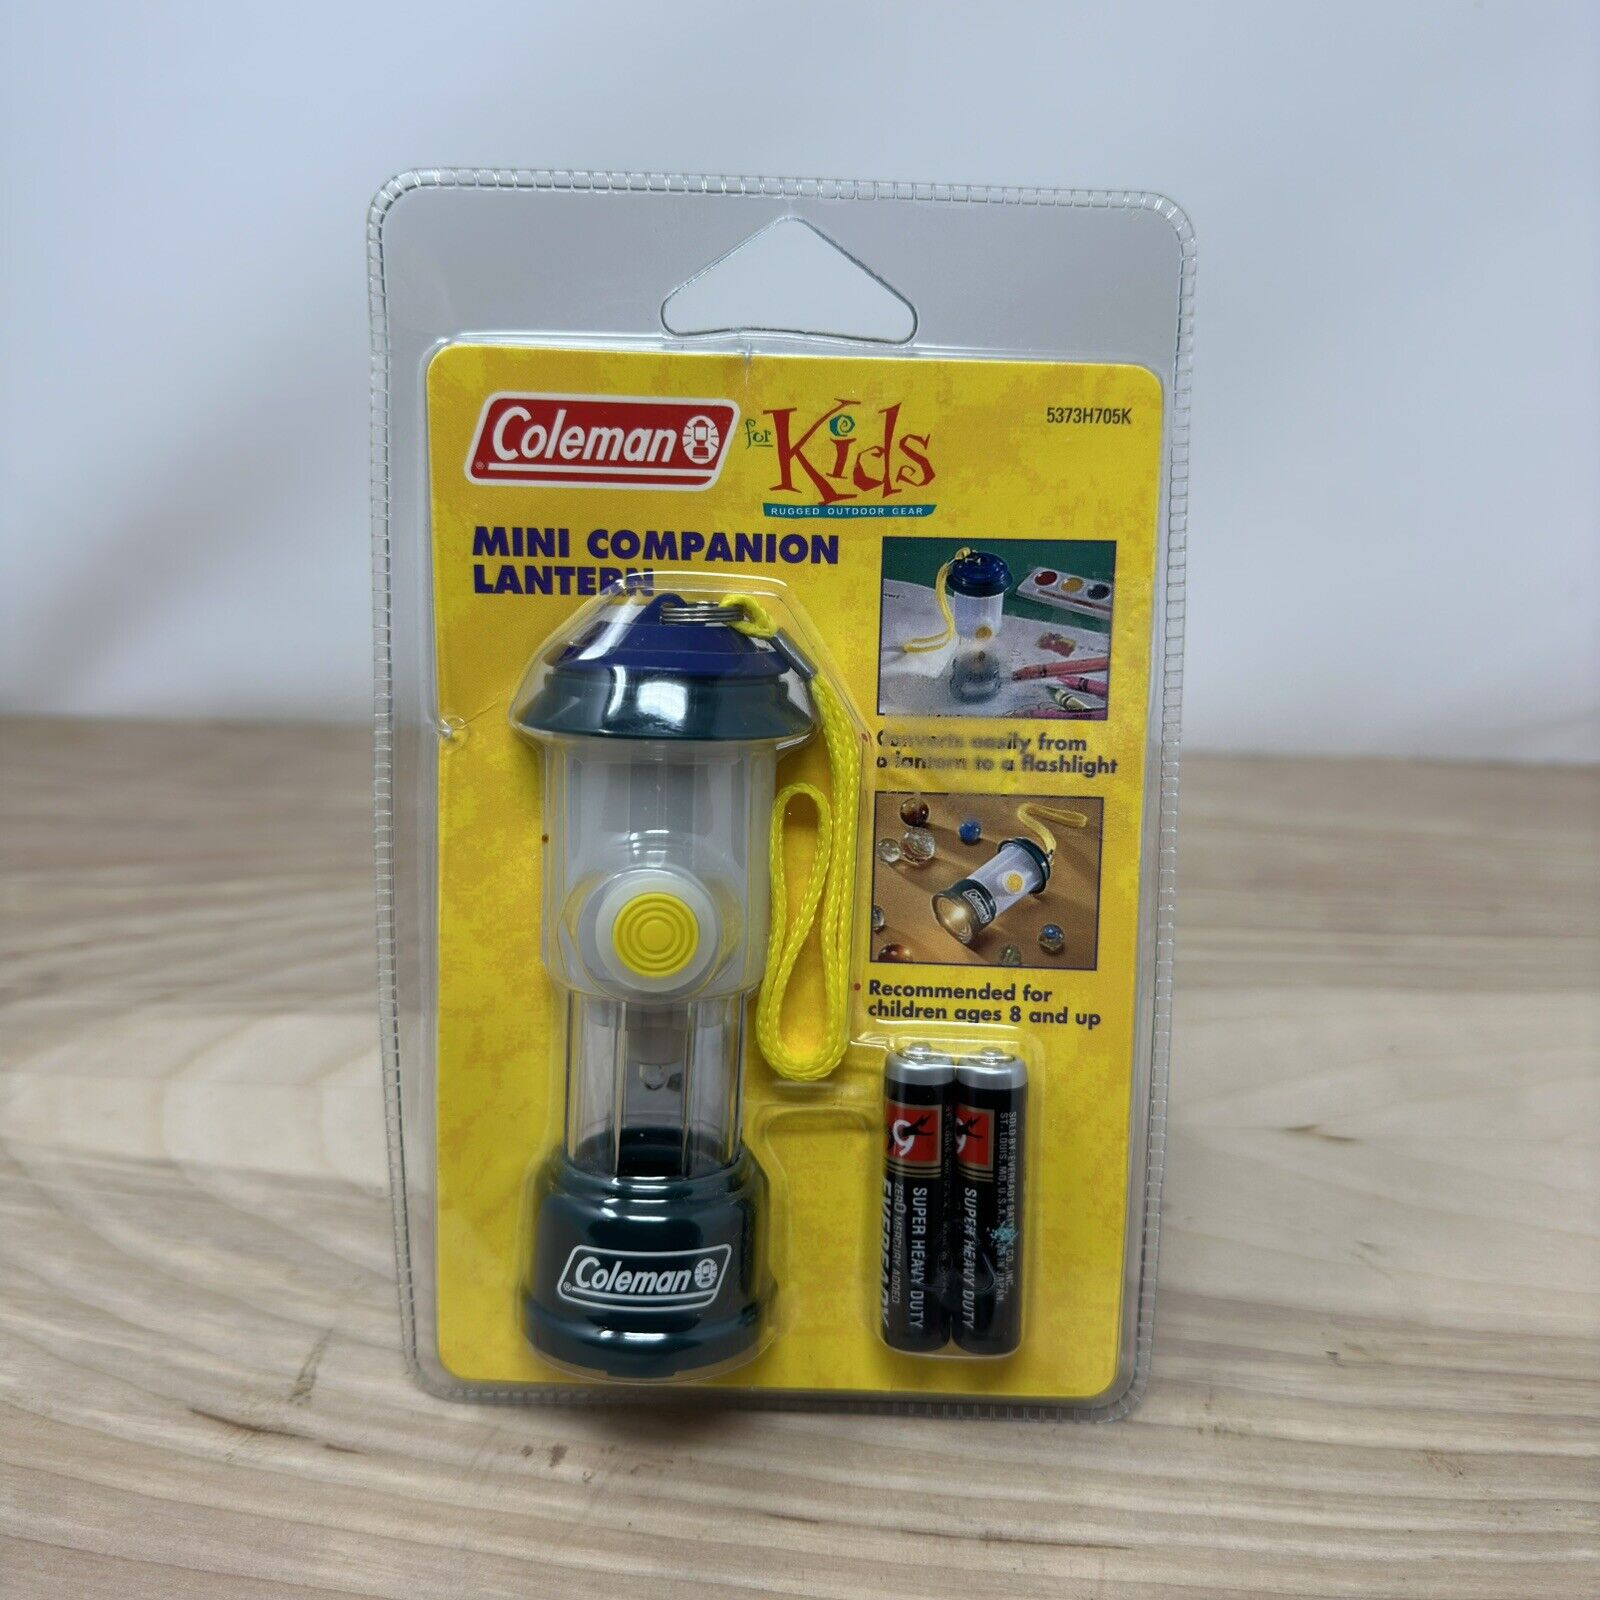 Kids Coleman NEW Mini Companion Lantern Converts To A Flashlight